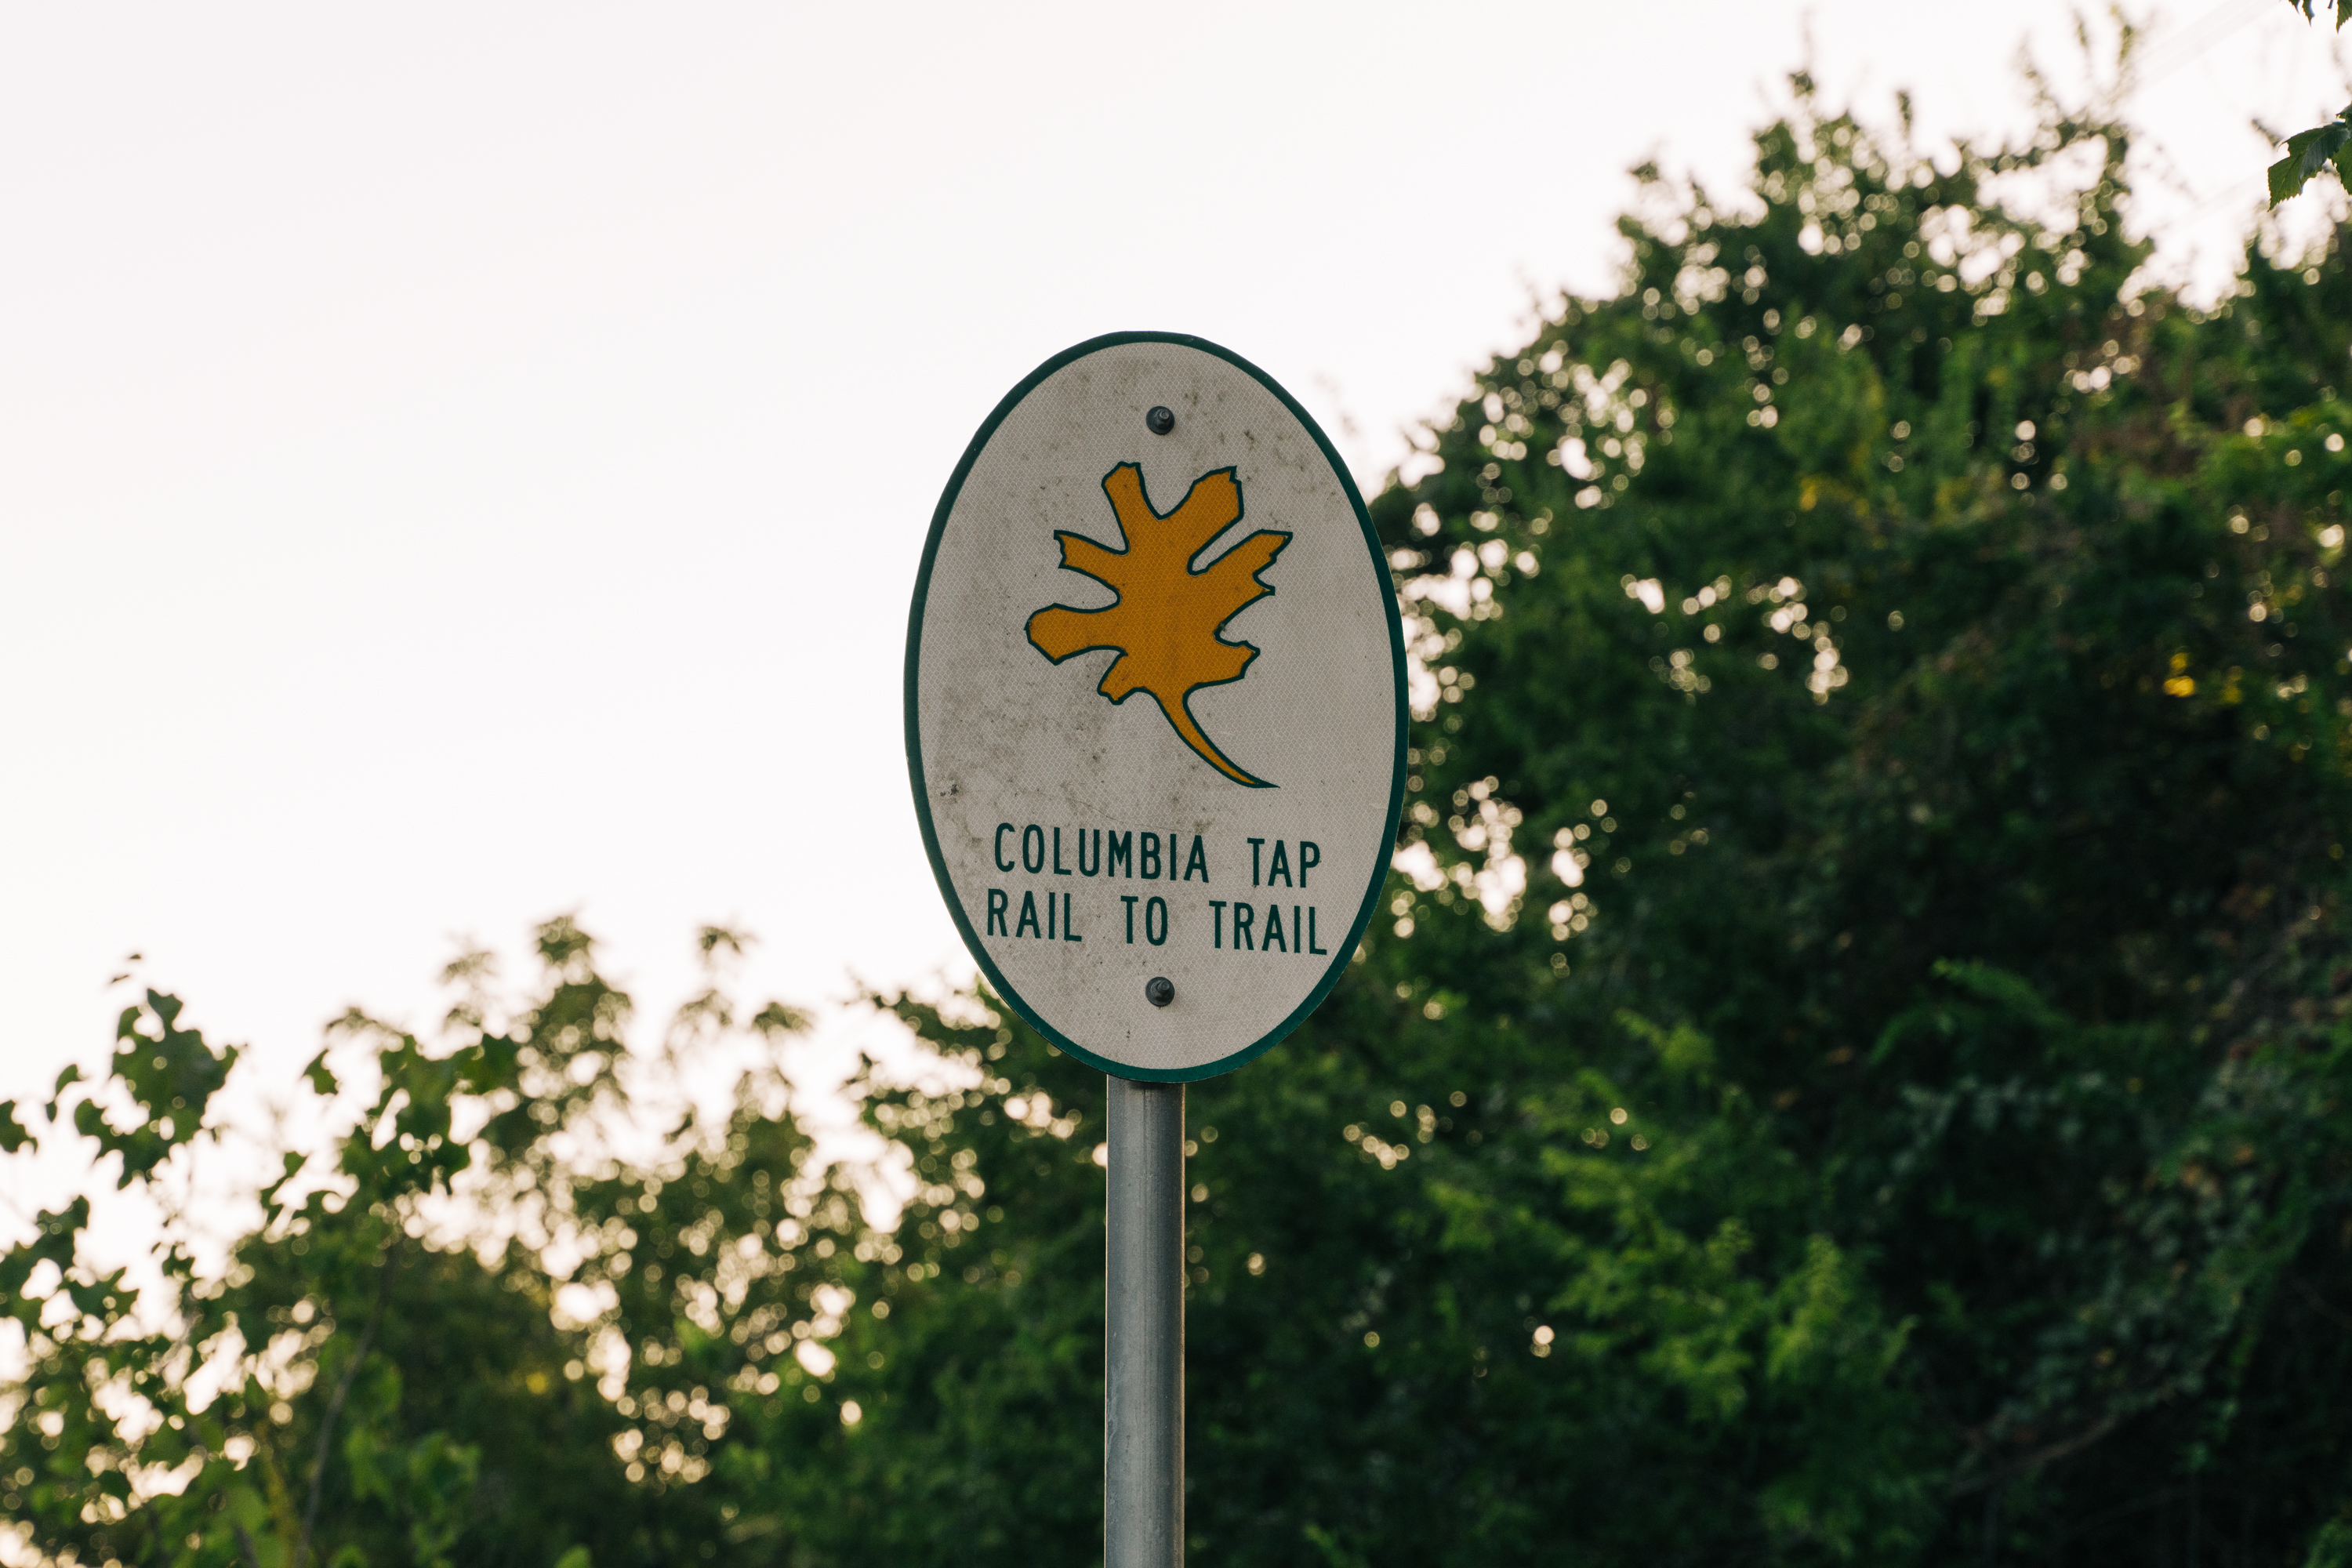 Columbia Tap Trail, a 4-mile stretch of biking/walking path